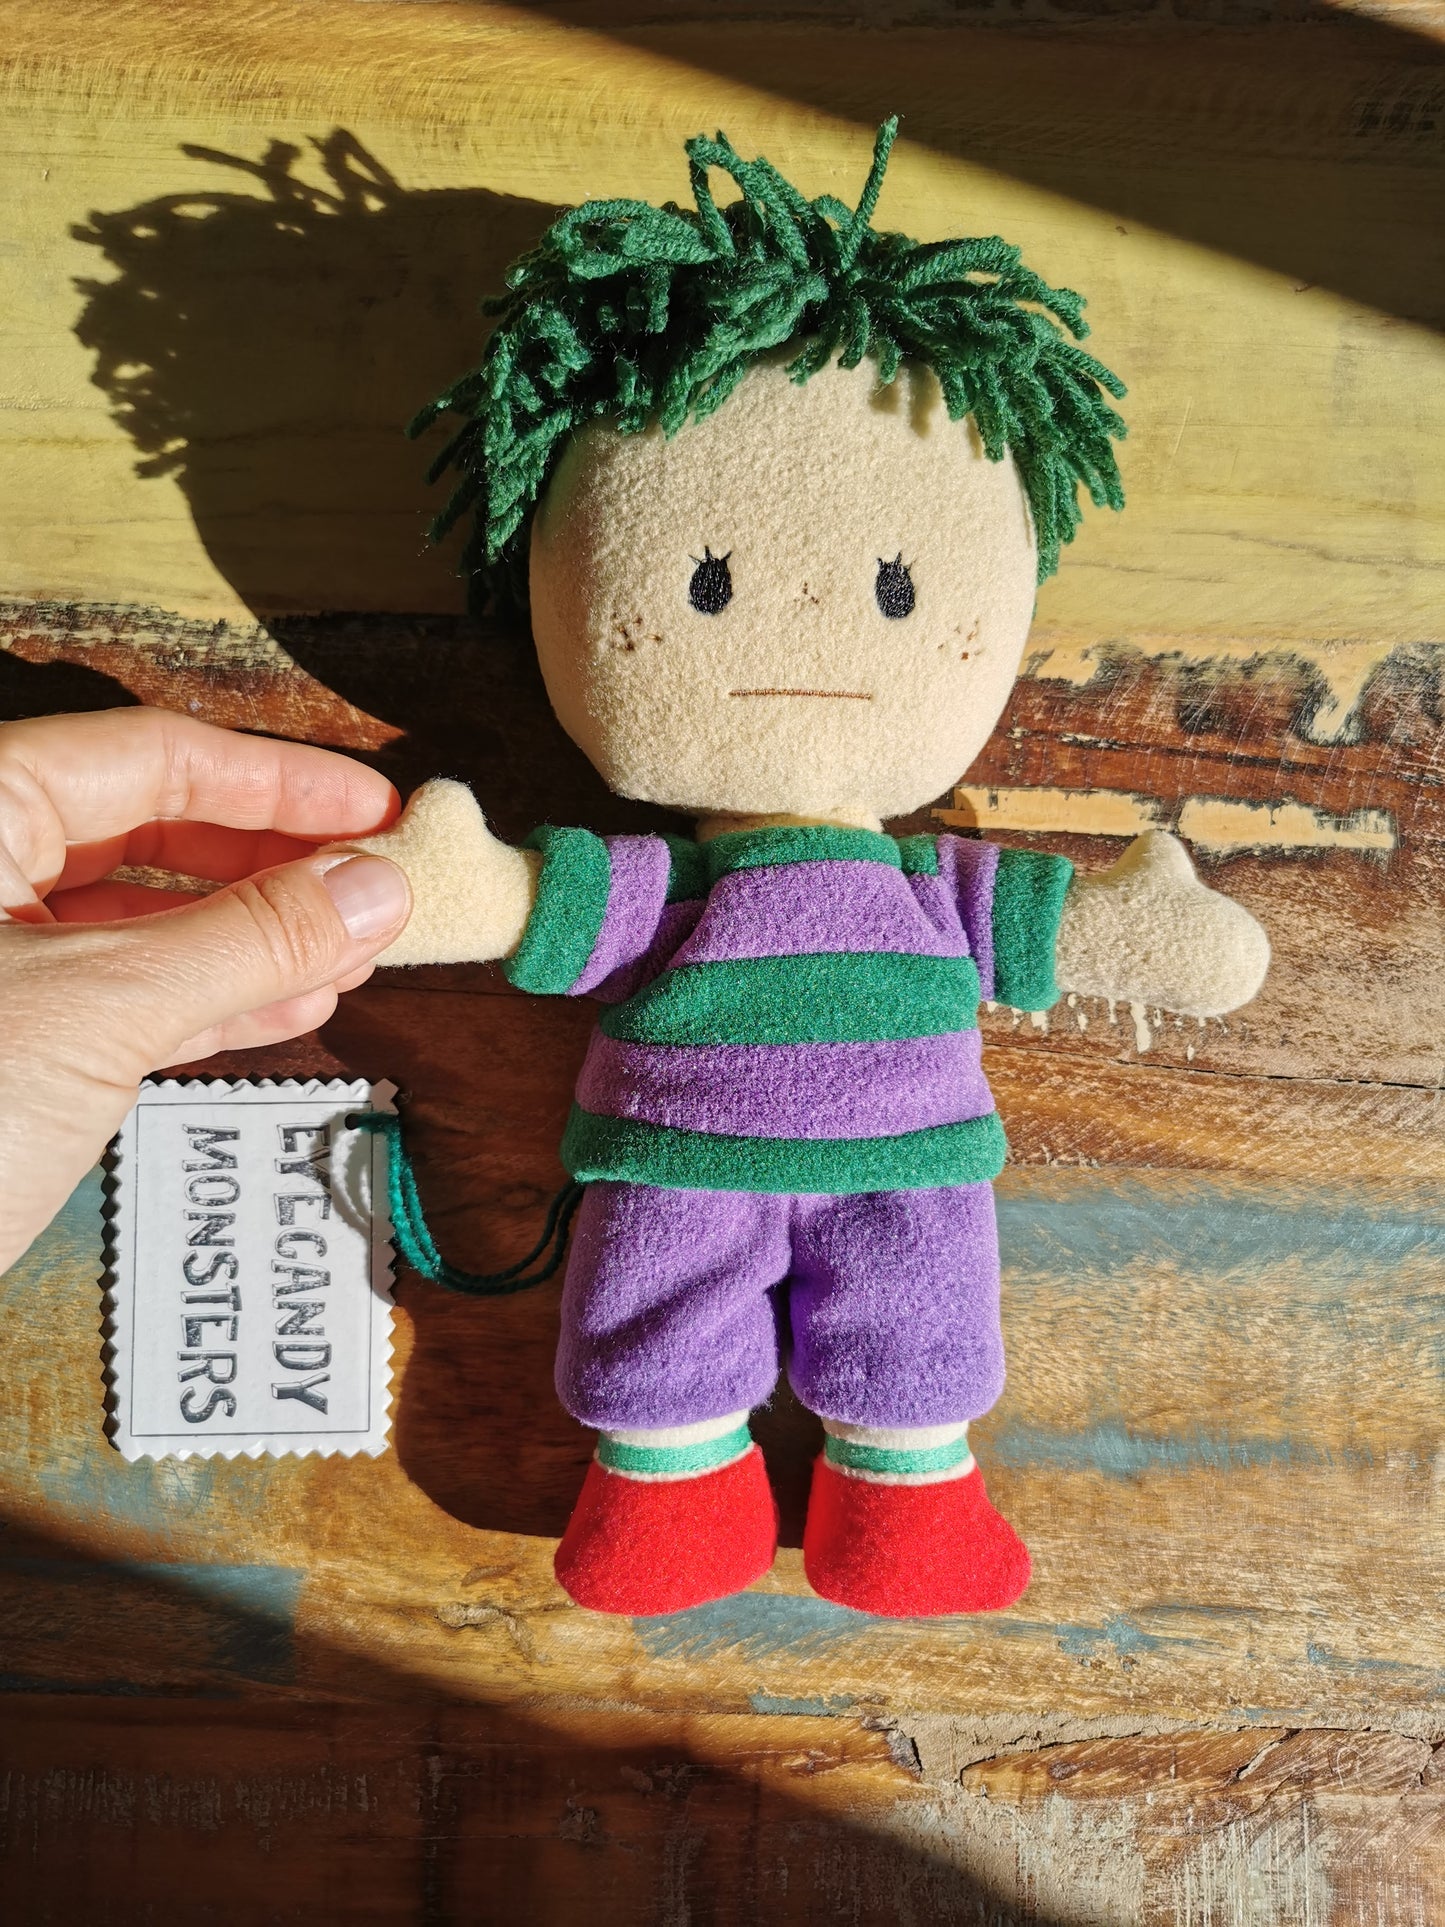  Toy Story 4 boy doll replica plush